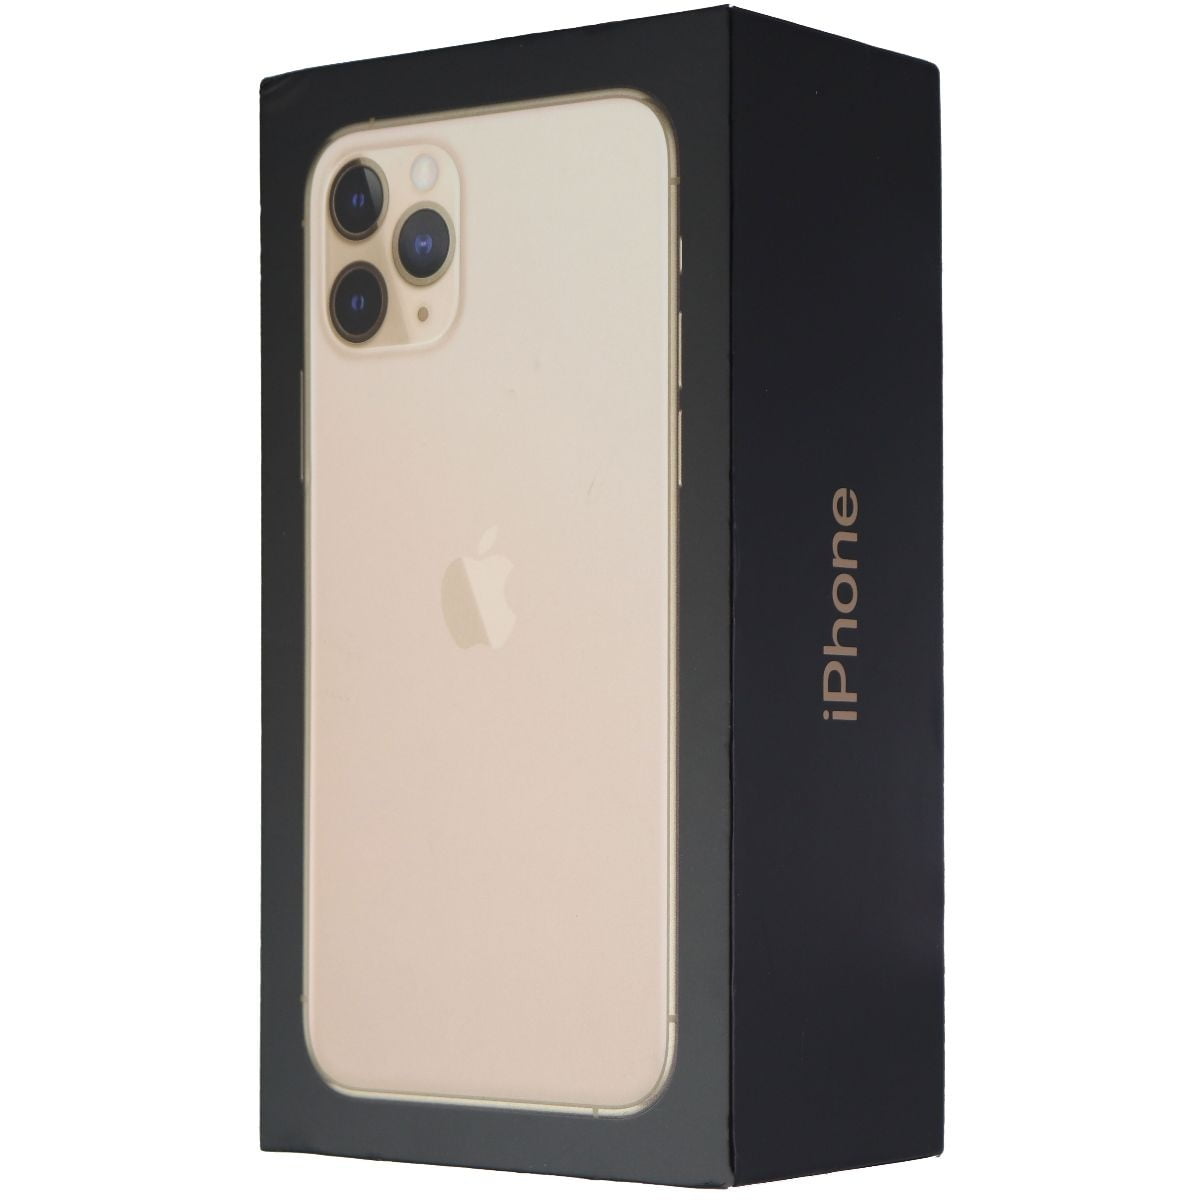 RETAIL BOX - Apple iPhone 11 Pro - 64GB / Gold - NO DEVICE (Refurbished) -  Walmart.com